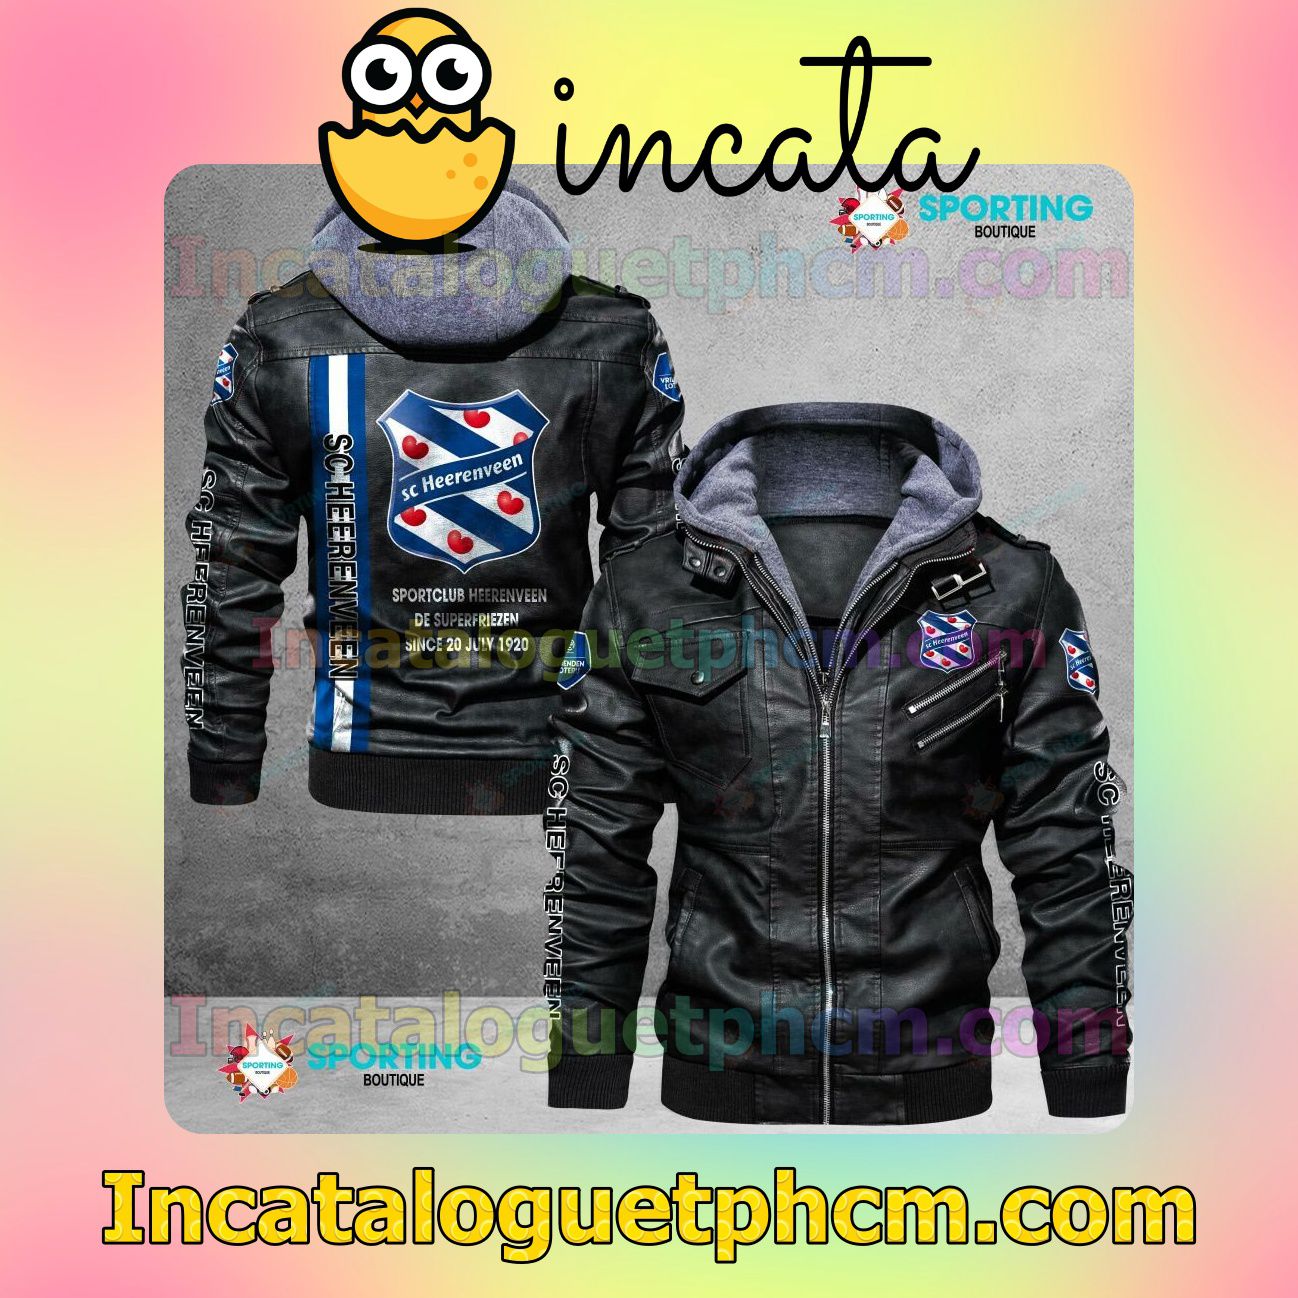 Check out SC Heerenveen Brand Uniform Leather Jacket